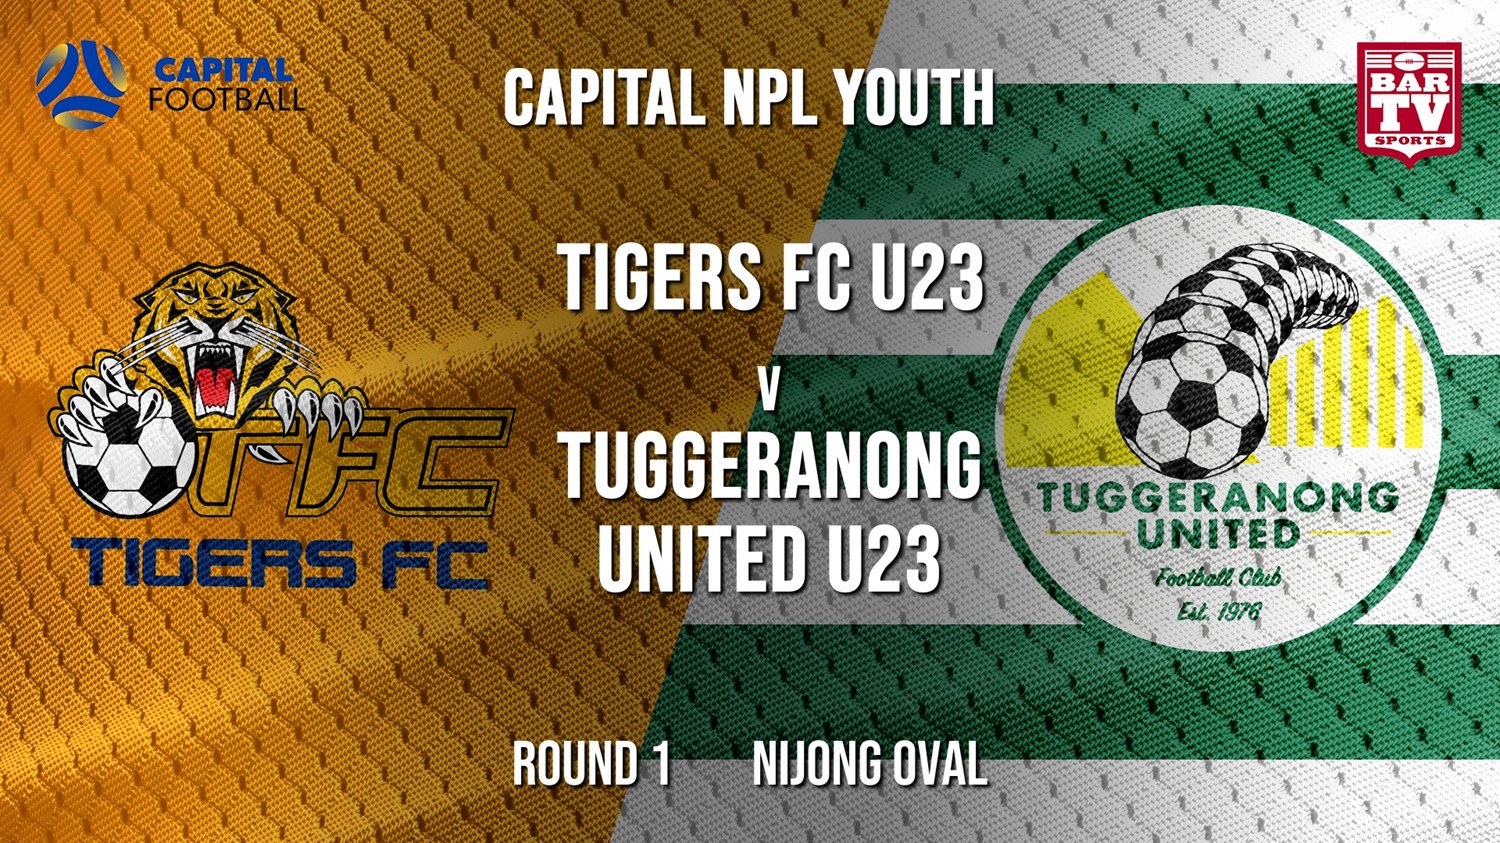 NPL Youth - Capital Round 1 - Tigers FC U23 v Tuggeranong United U23 Minigame Slate Image